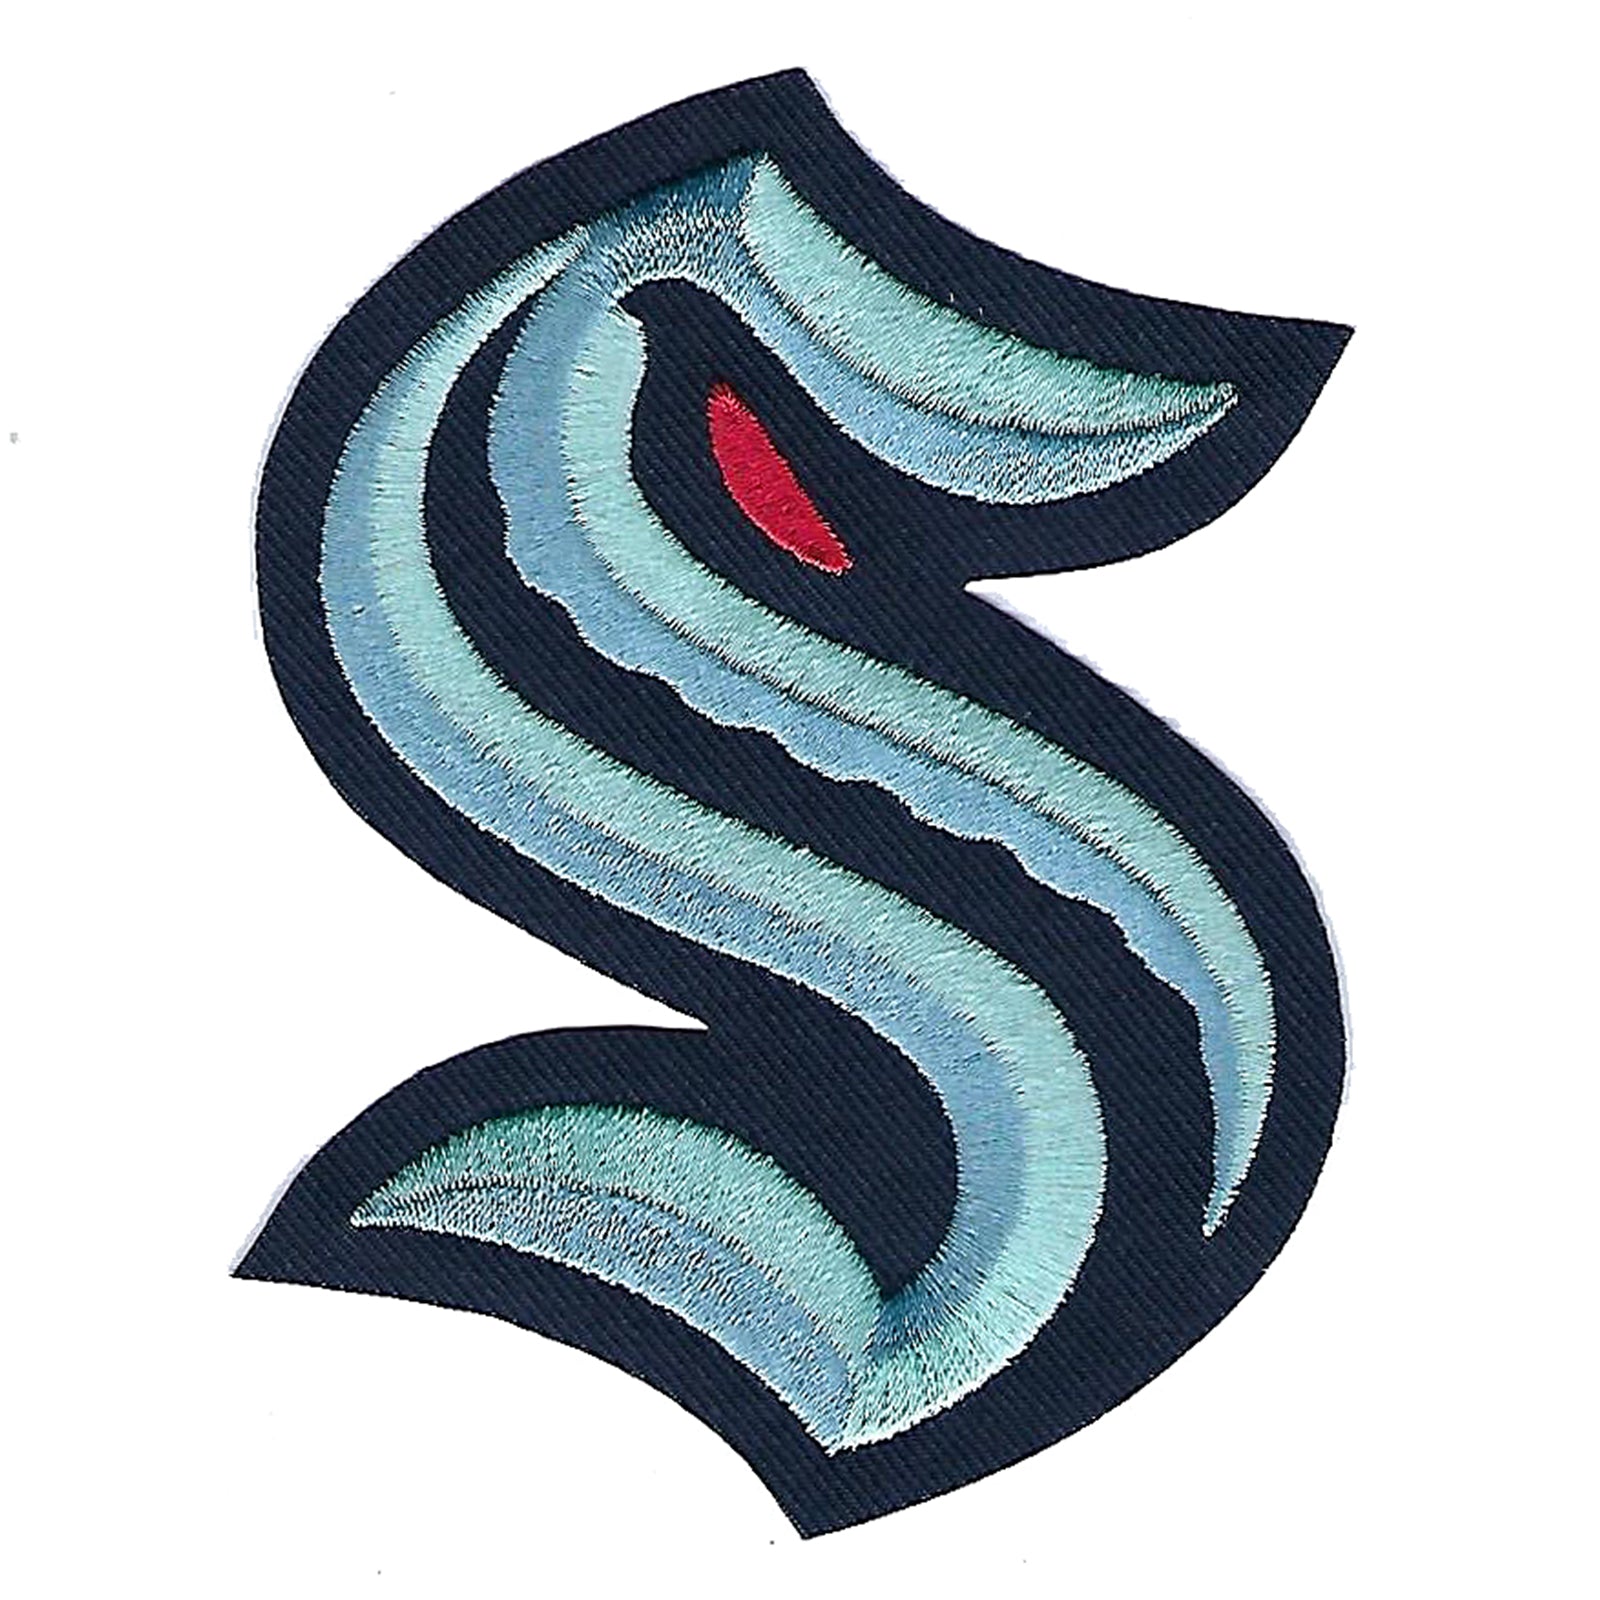 Seattle Kraken Primary Logo Animation